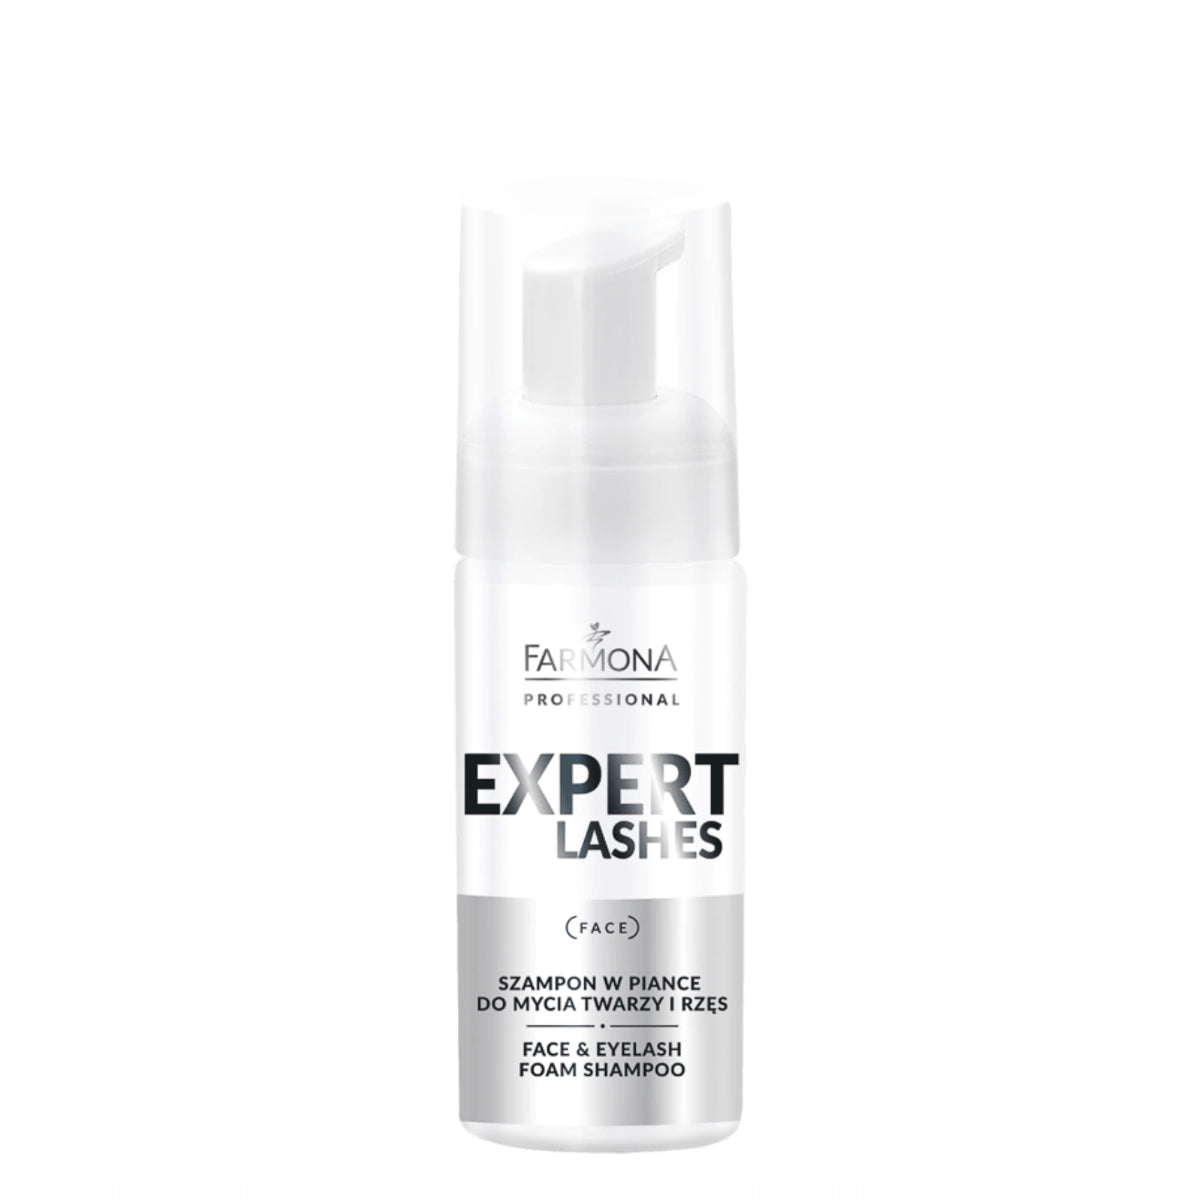 Farmona Professional Expert Lashes Face & Eyelash Foam Shampoo - Roxie Cosmetics